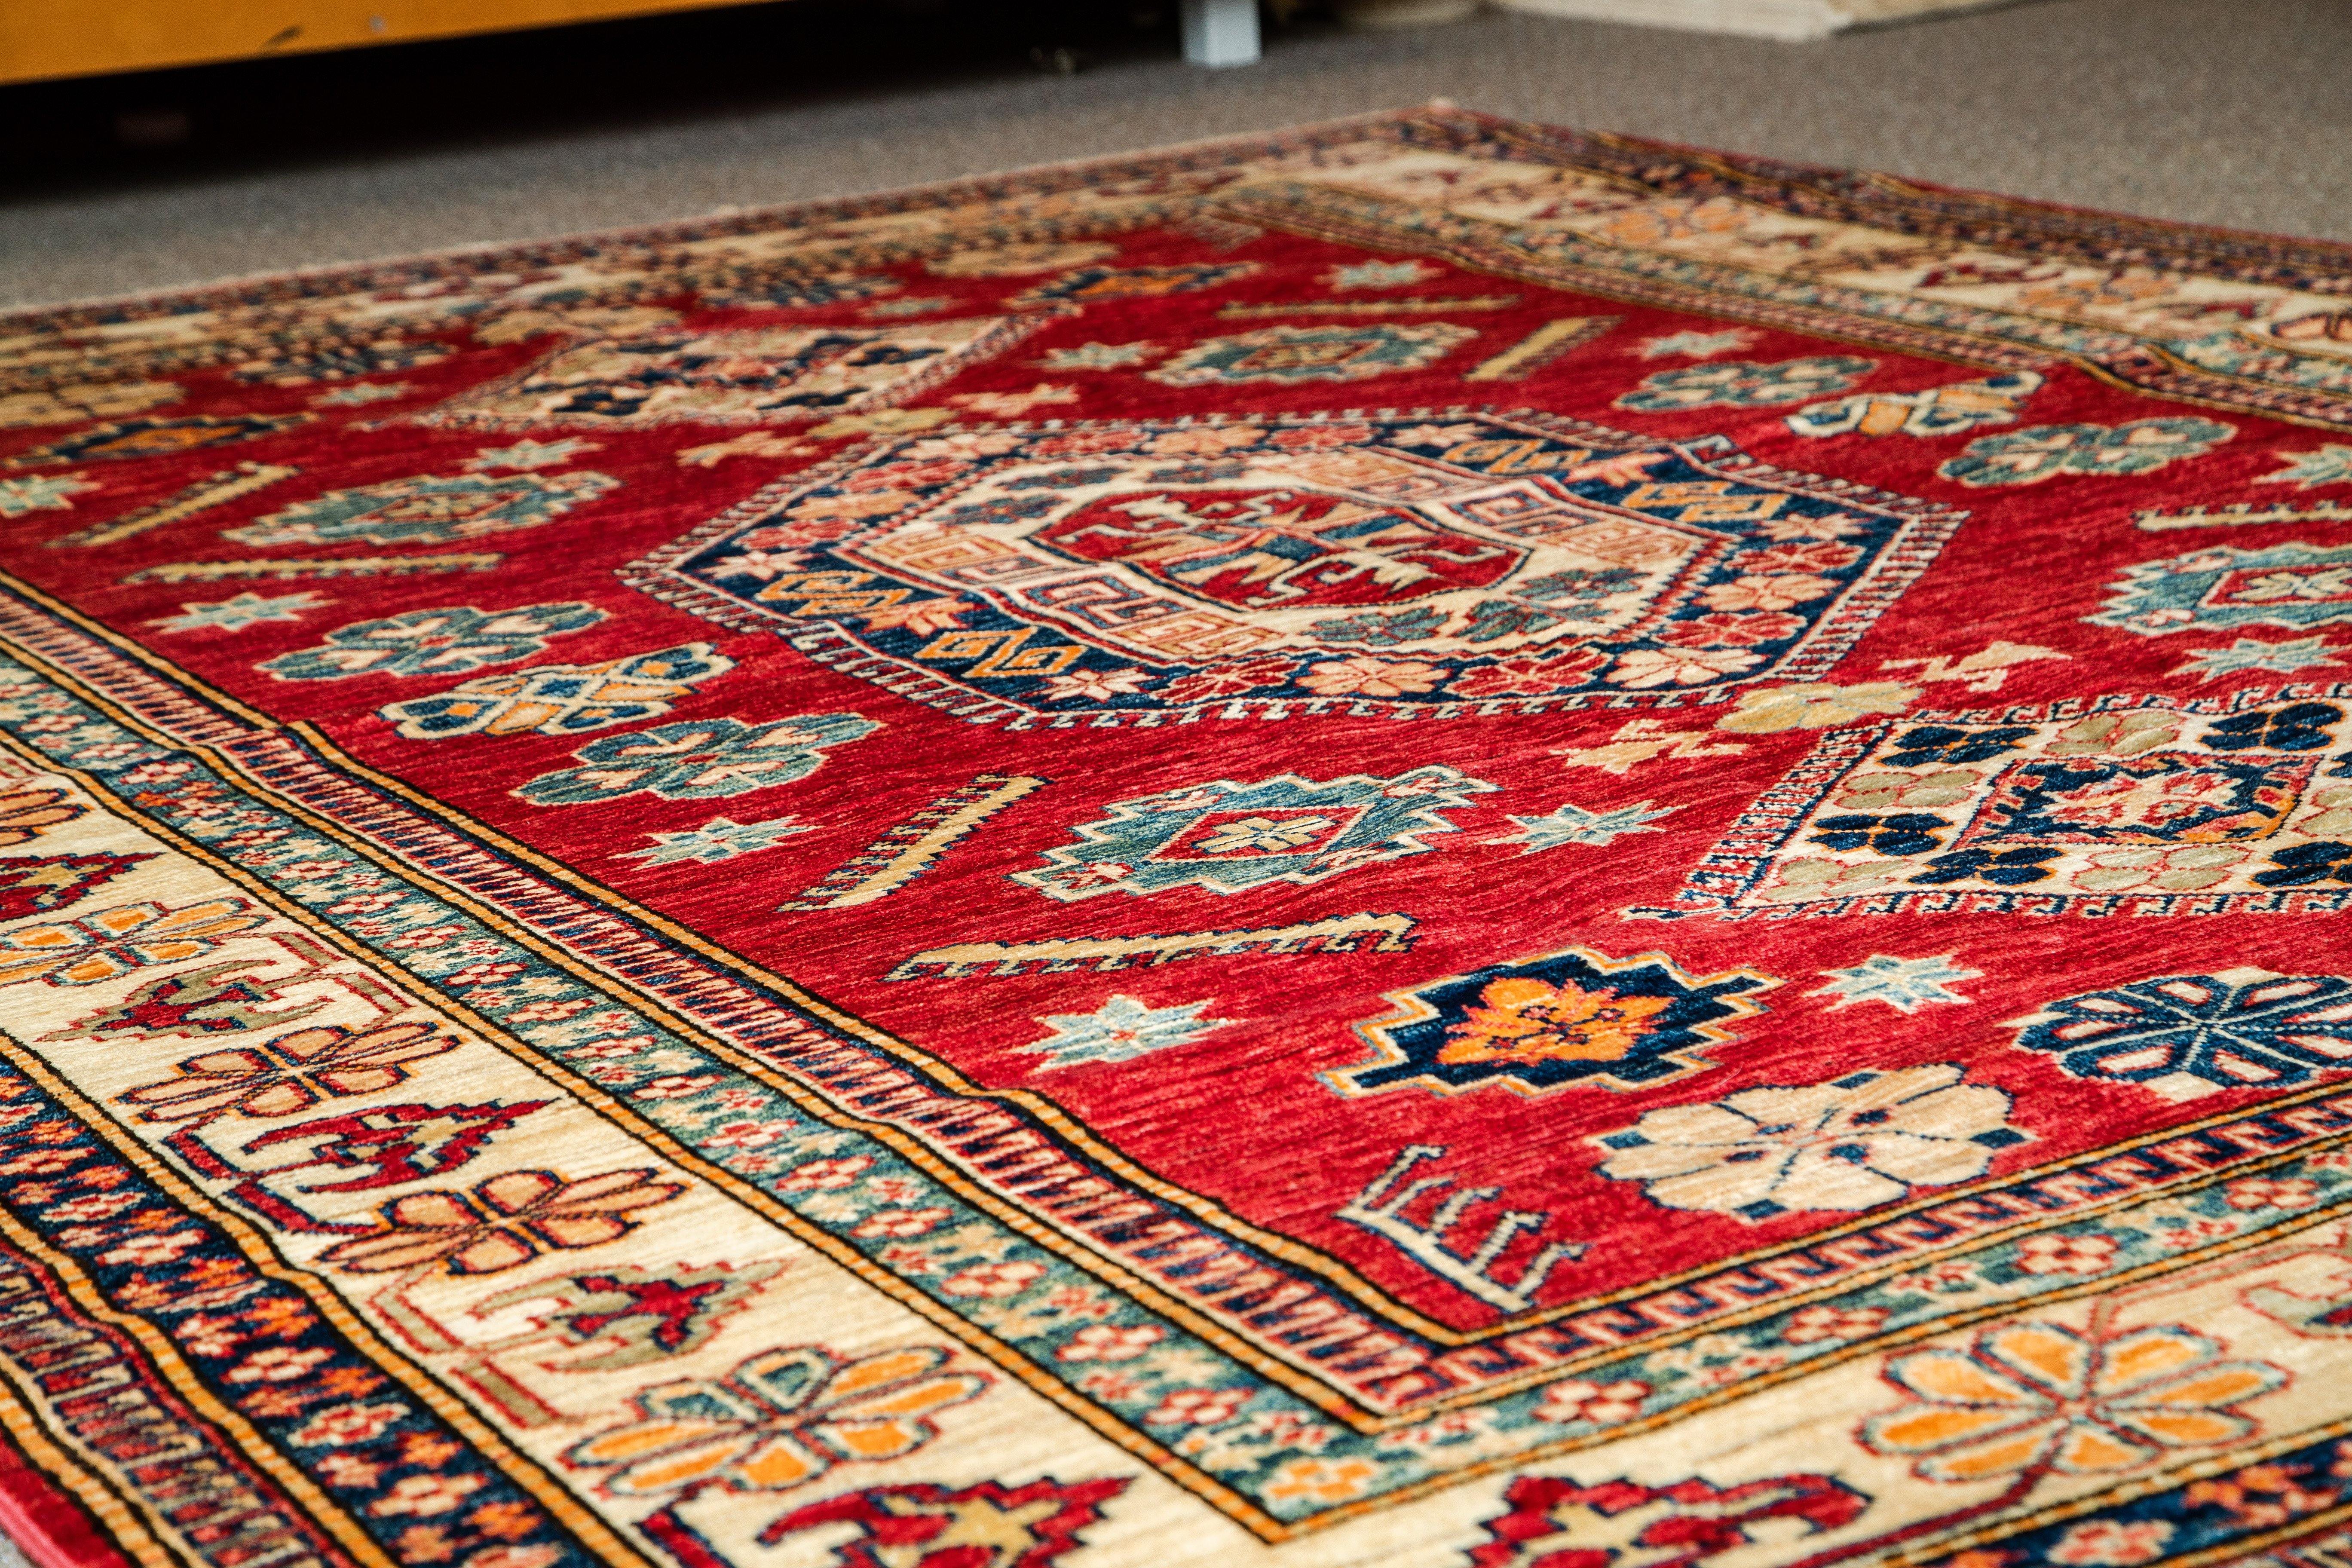 Kazak Supreme 240180 - The Rug Loft rugs ireland